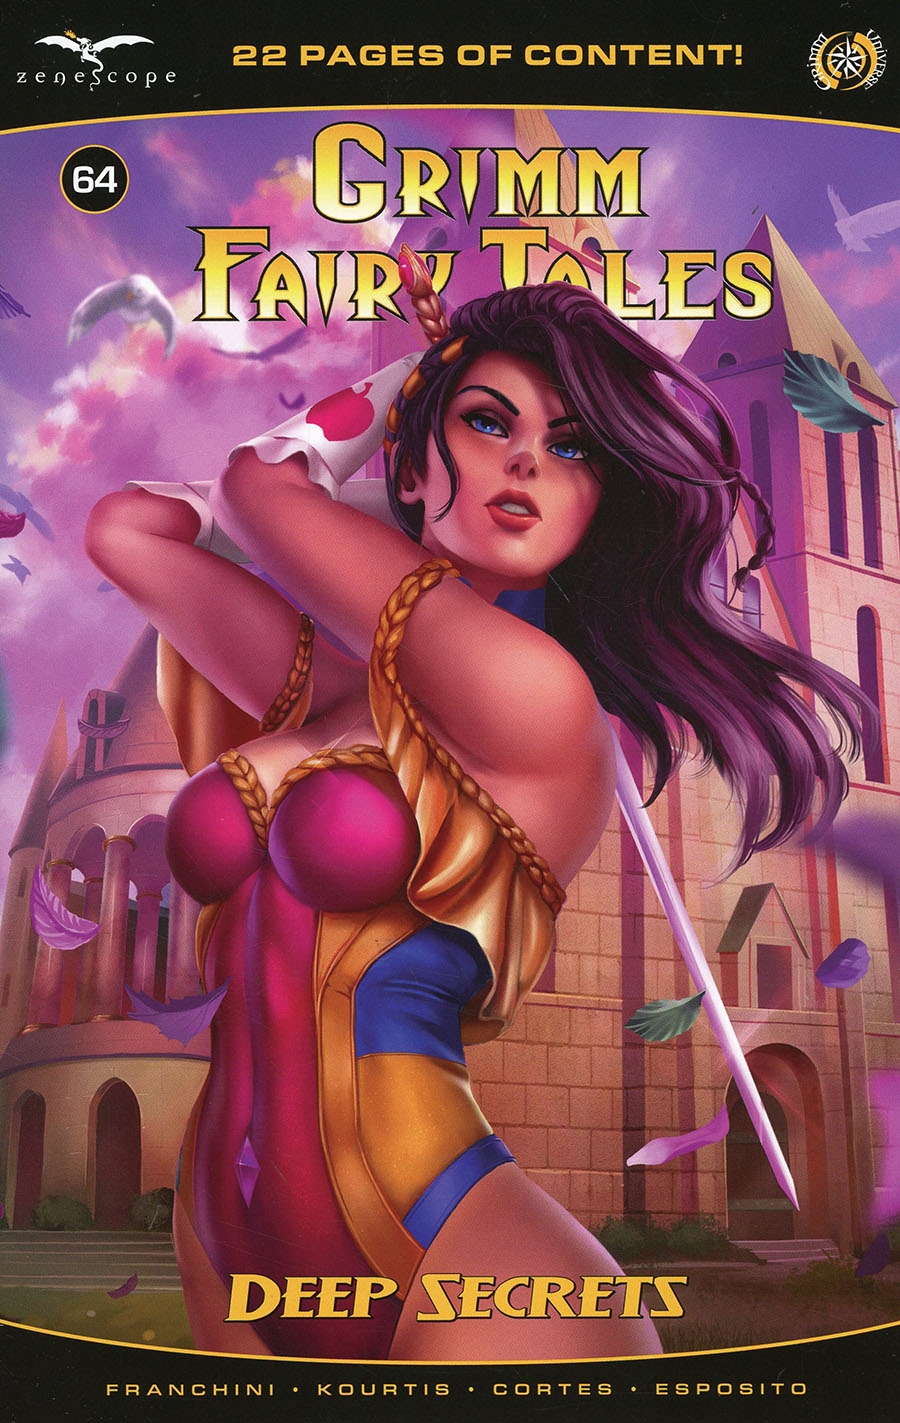 Grimm Fairy Tales Vol 2 #64 Cover C Tristan Thompson